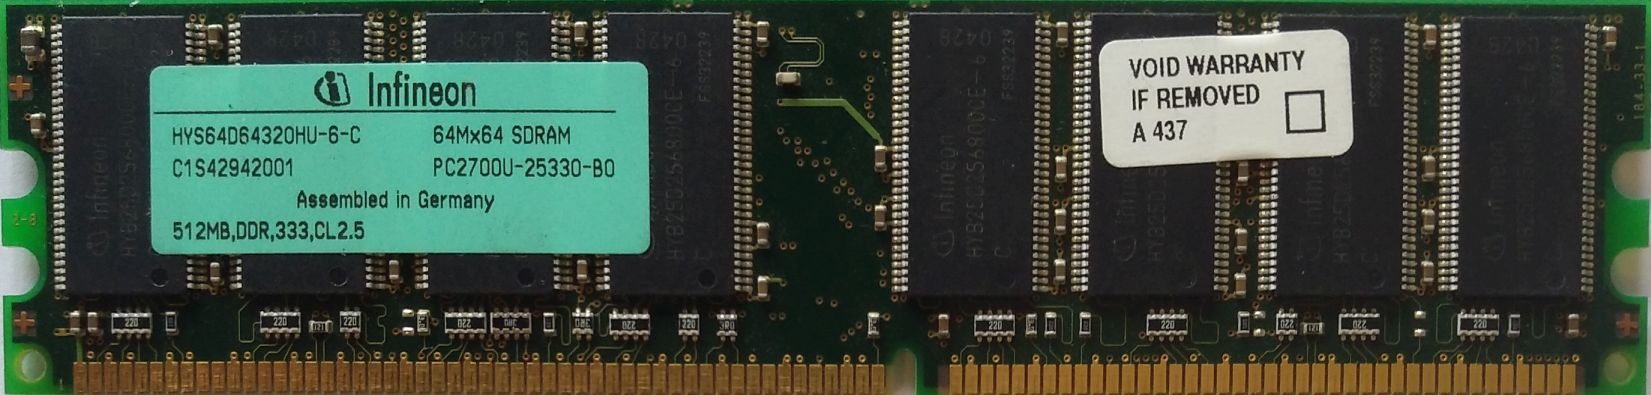 DDR 512MB 333Mhz-PC2700 / Infineon HYS64D64320HU-6-C